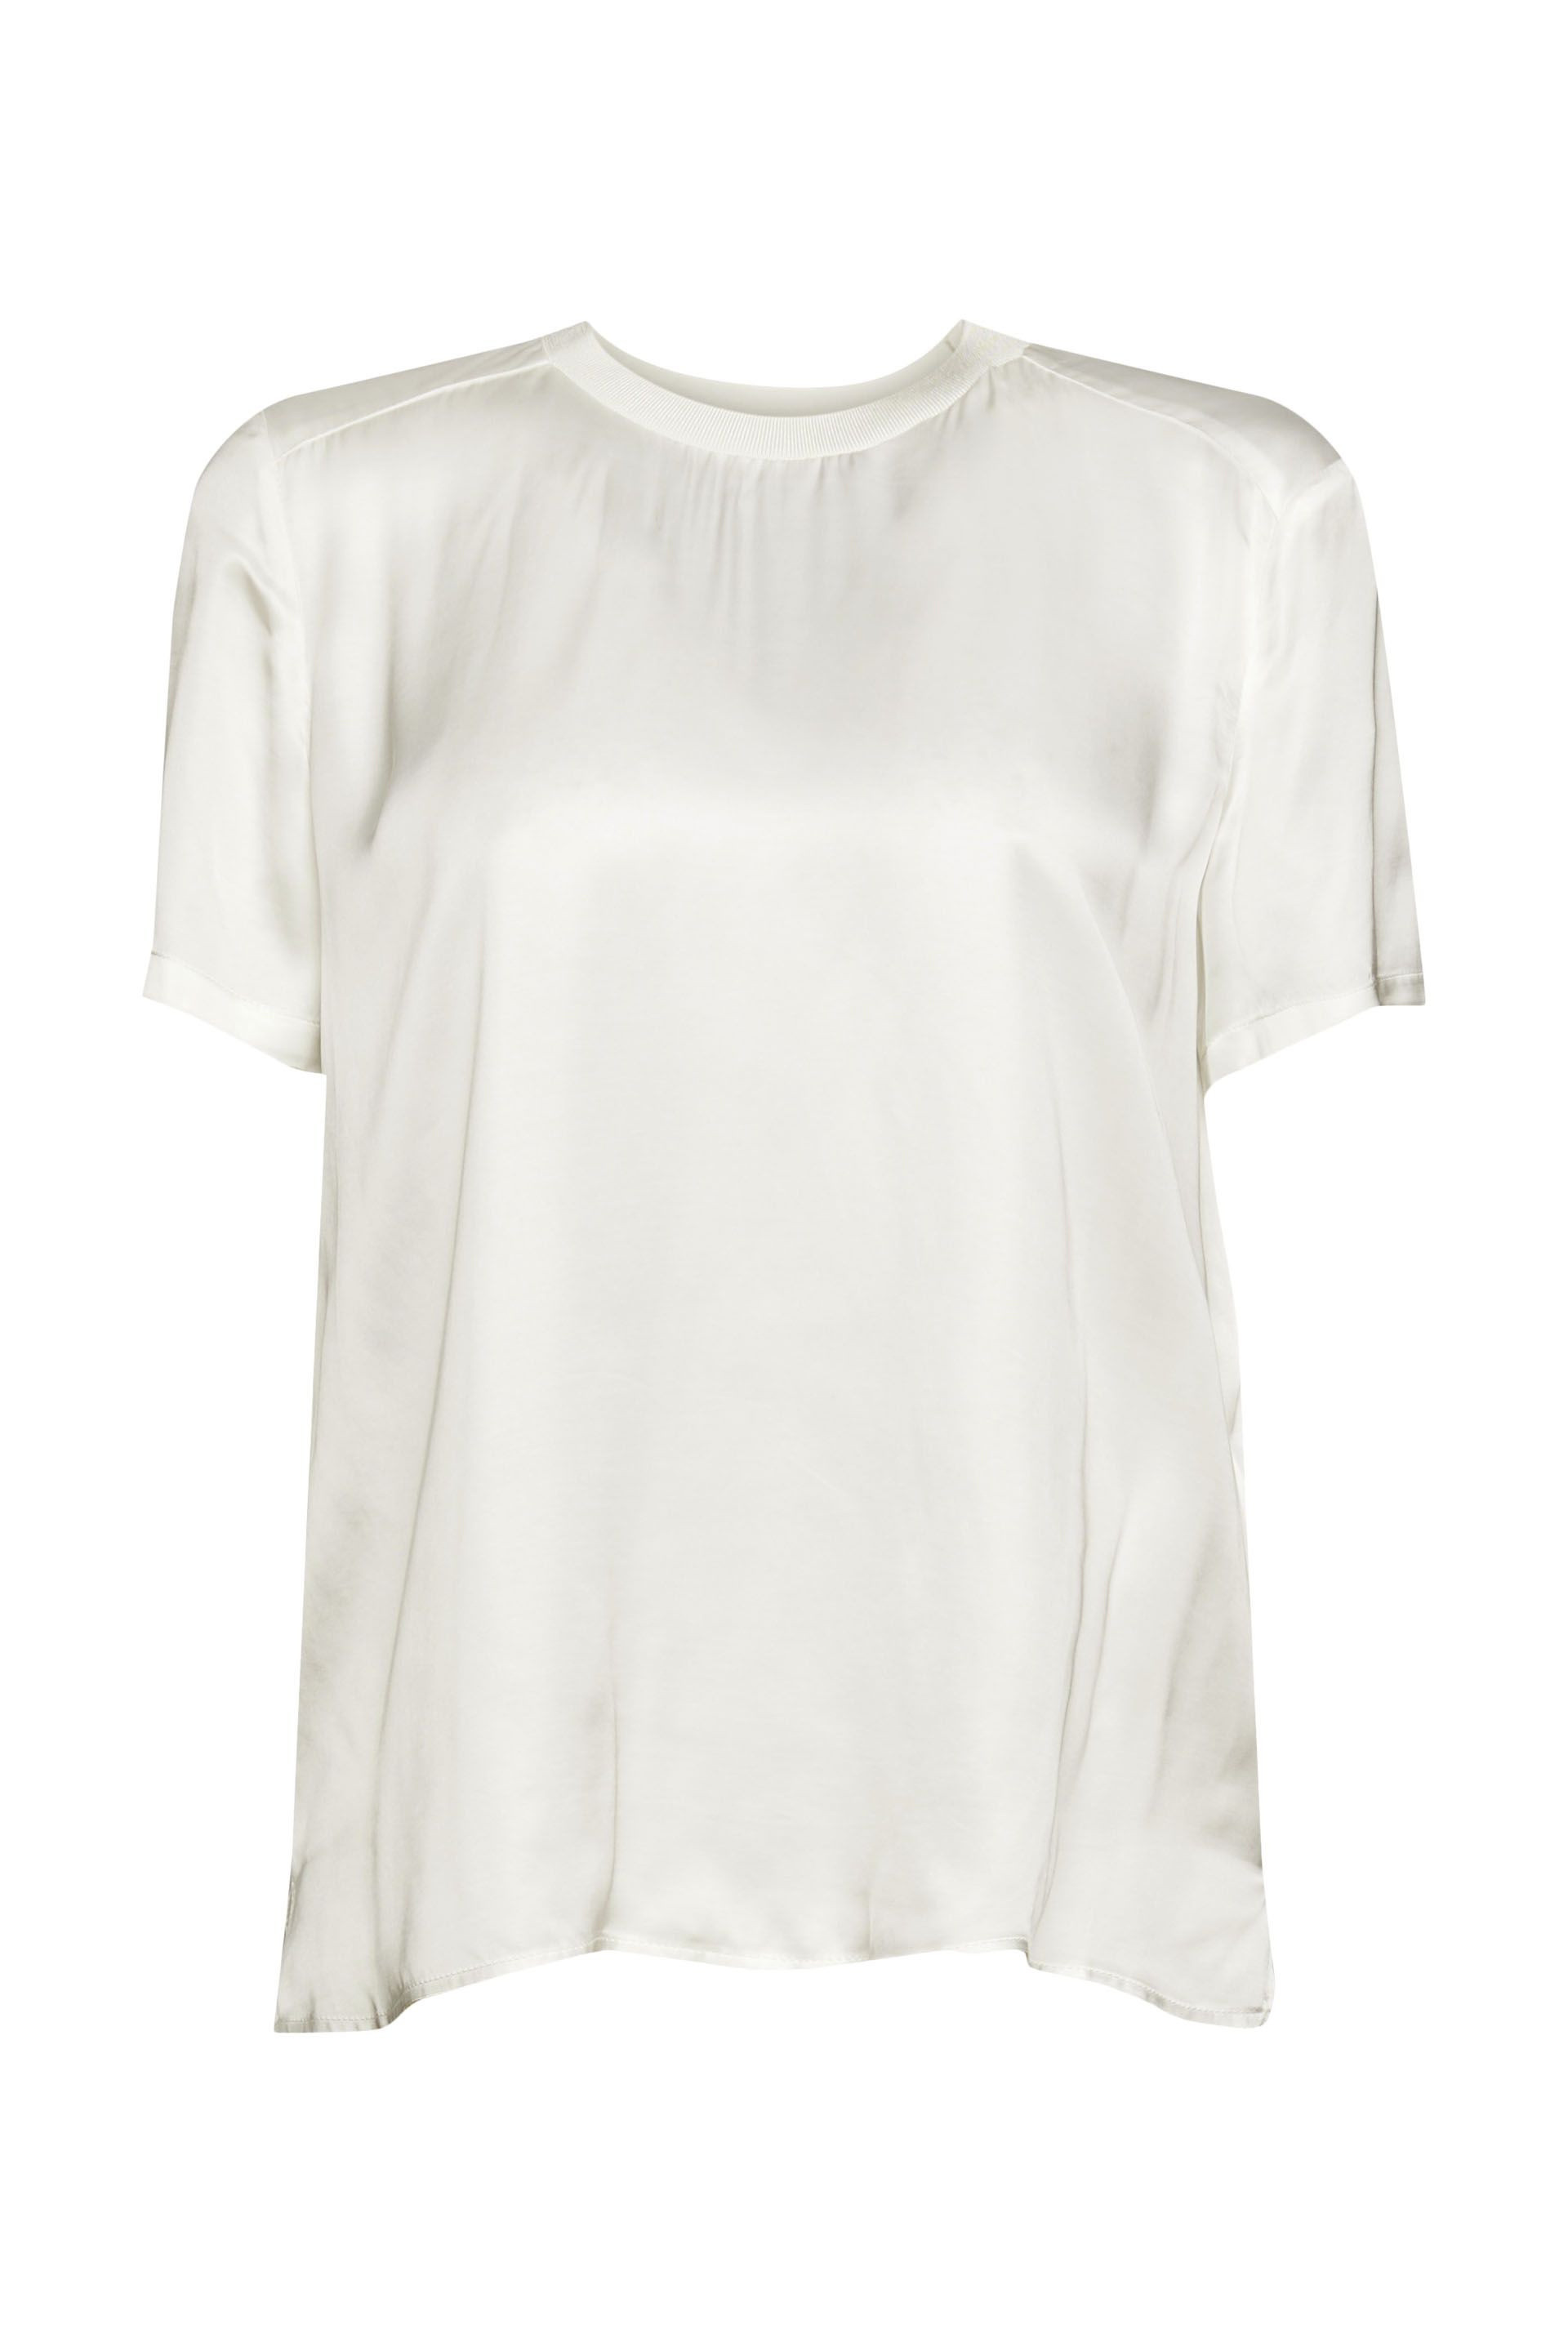 Short-sleeved silk-effect blouse, White, large image number 0